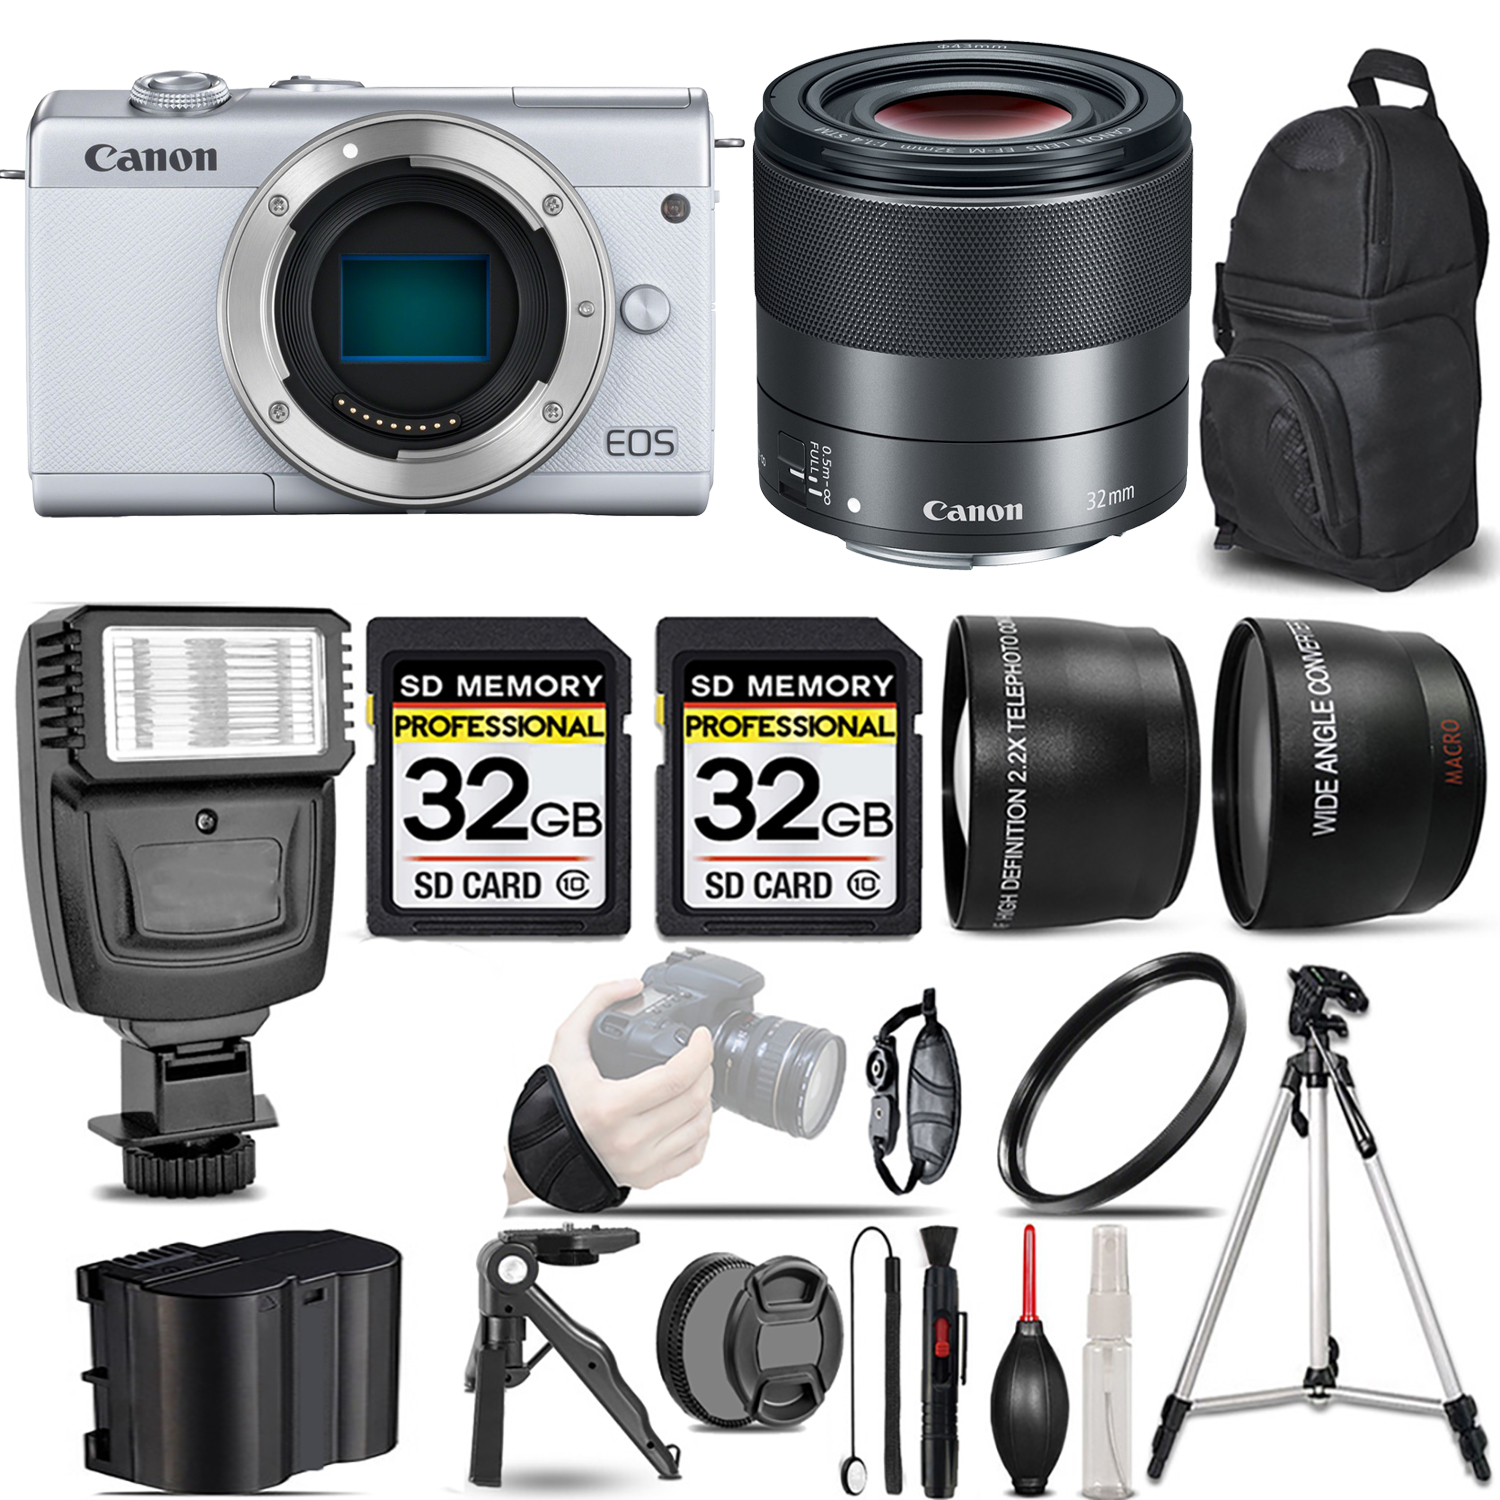 EOS M200  Camera (White) + 32mm f/1.4 STM Lens + Flash + 64GB - Kit *FREE SHIPPING*